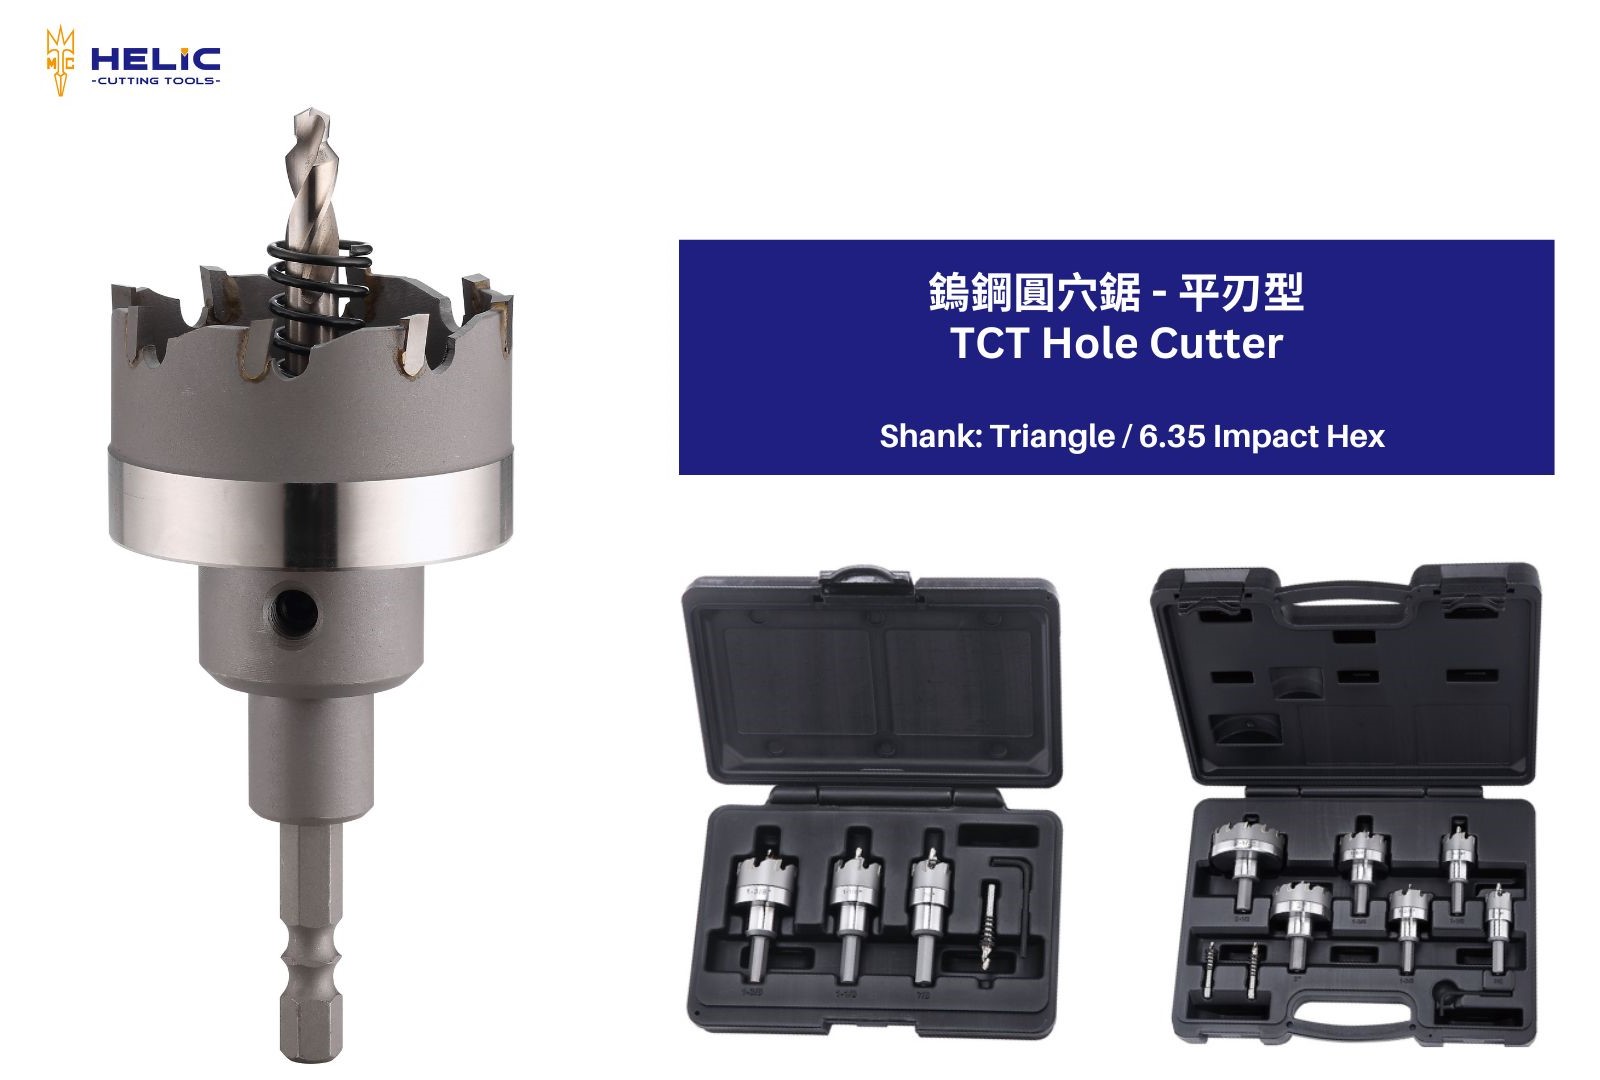 TCT Hole Cutter